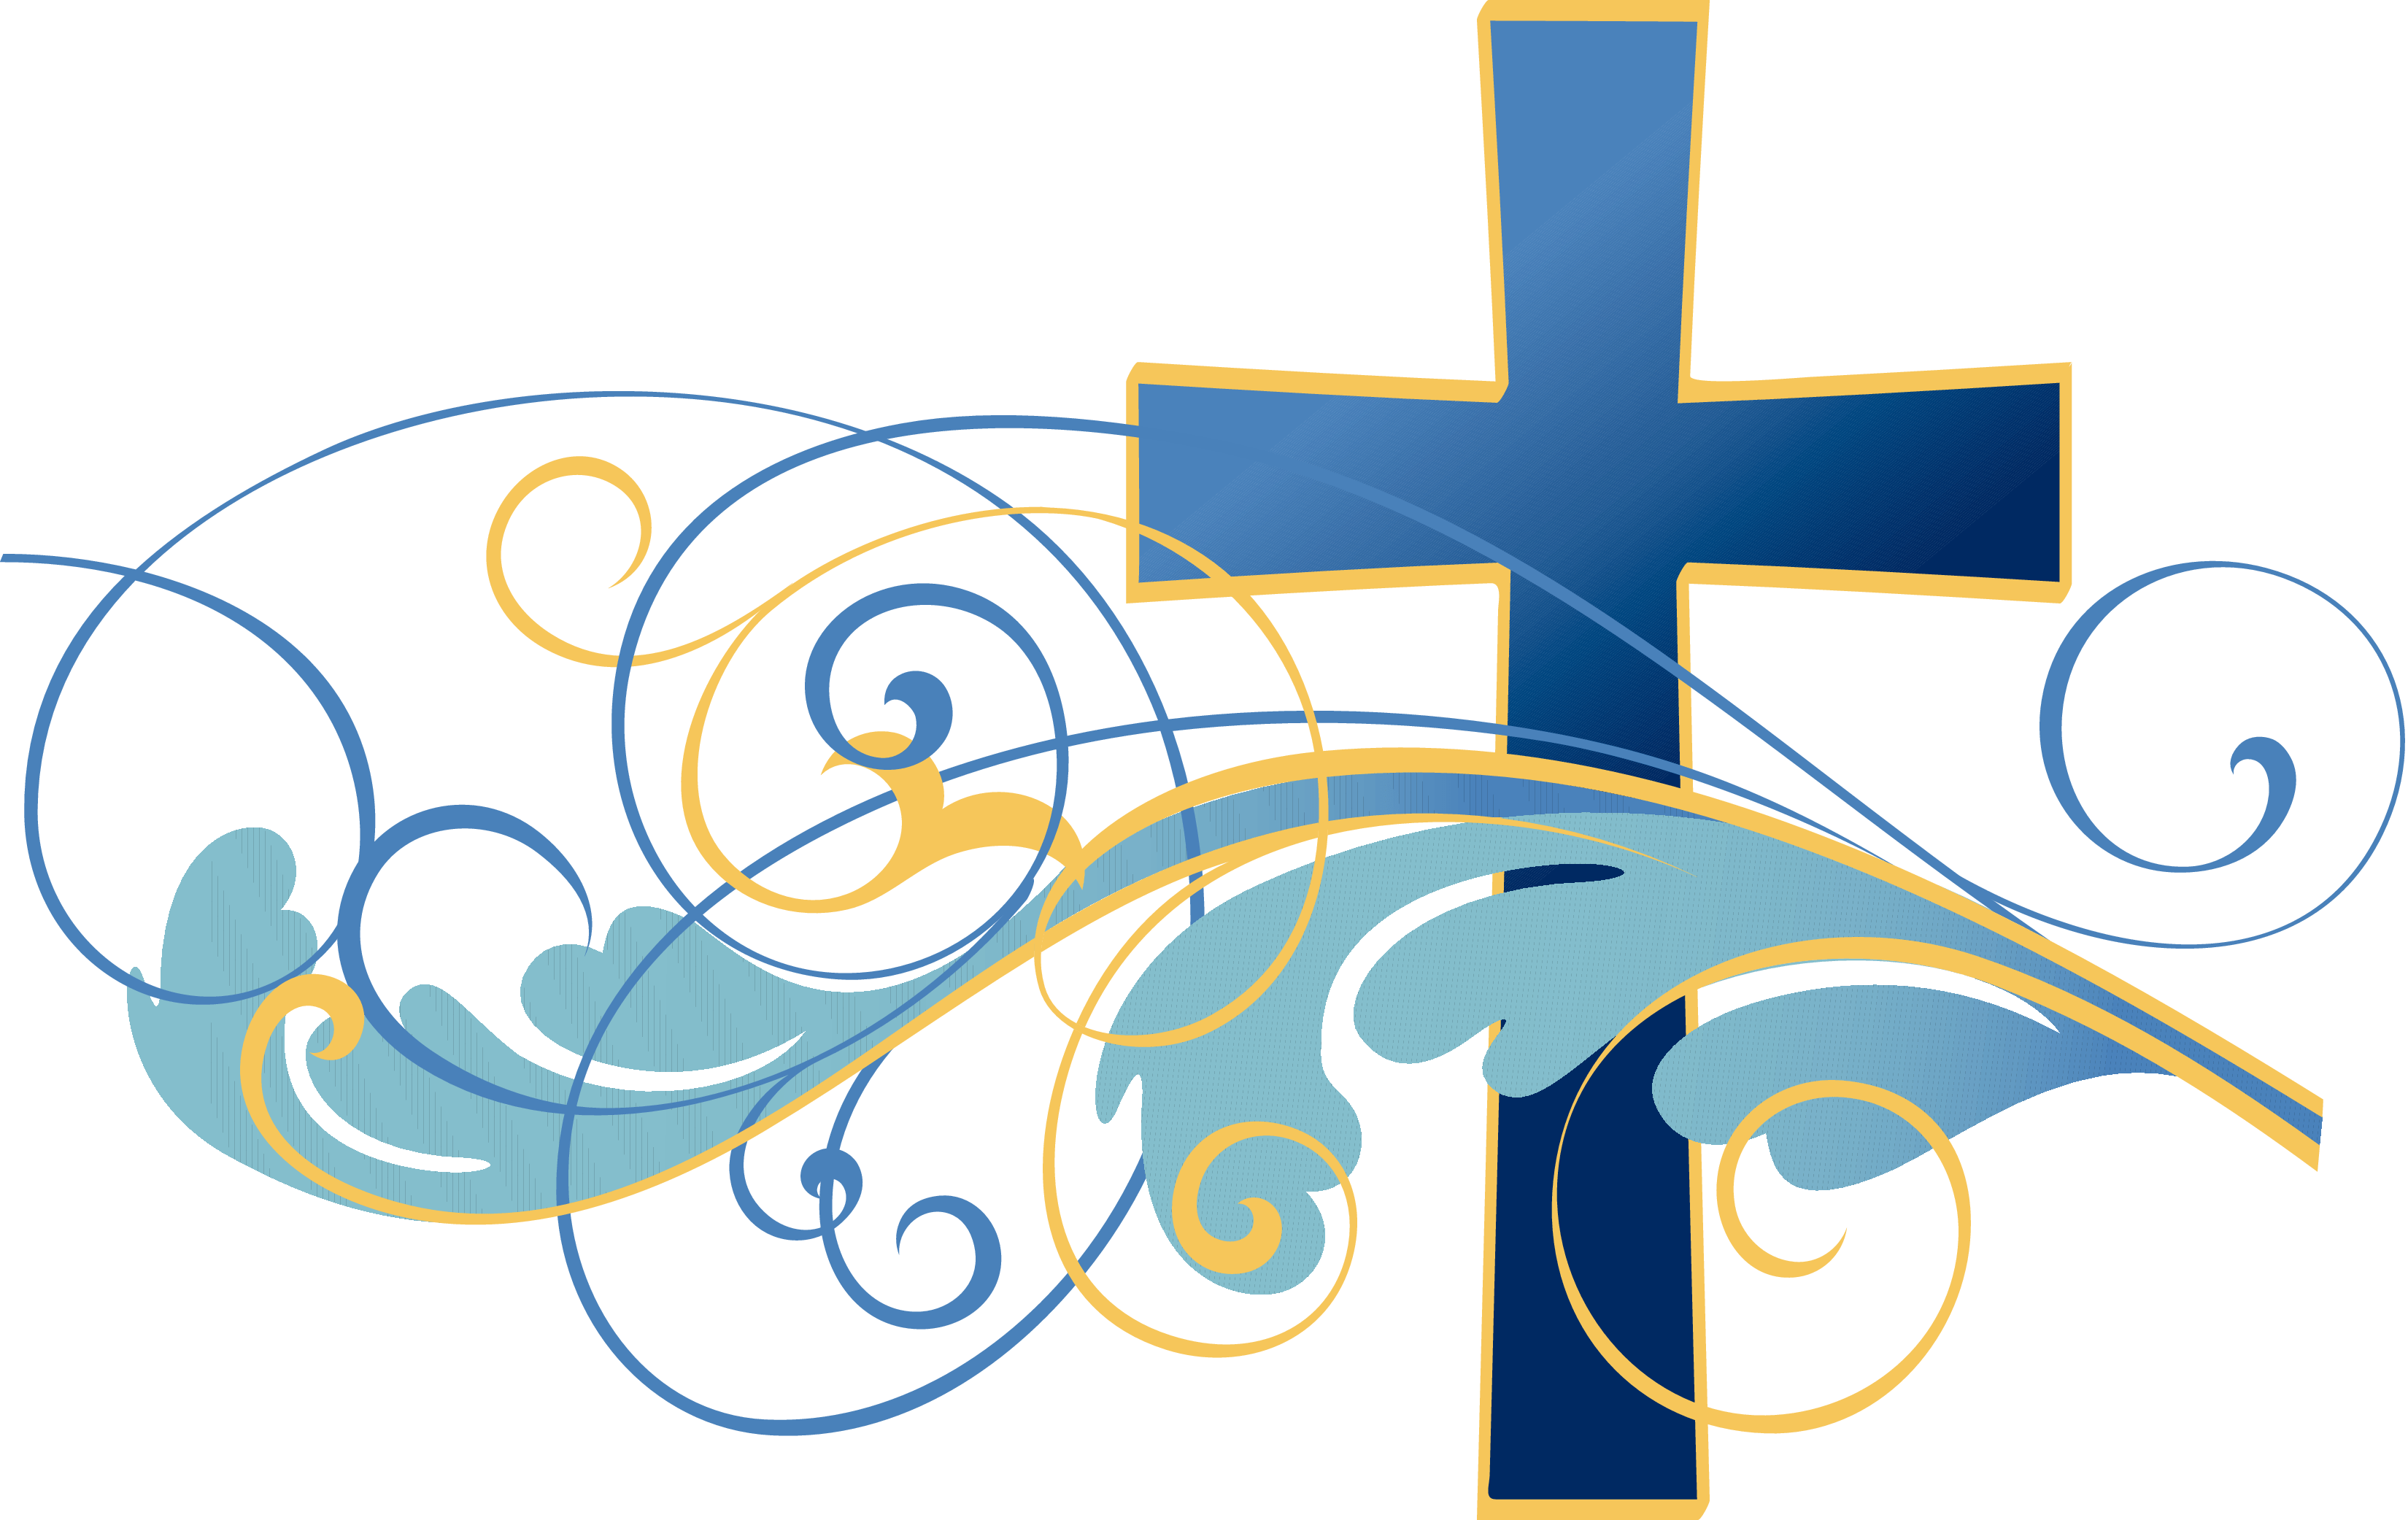 Free Christian Cross Clip Art